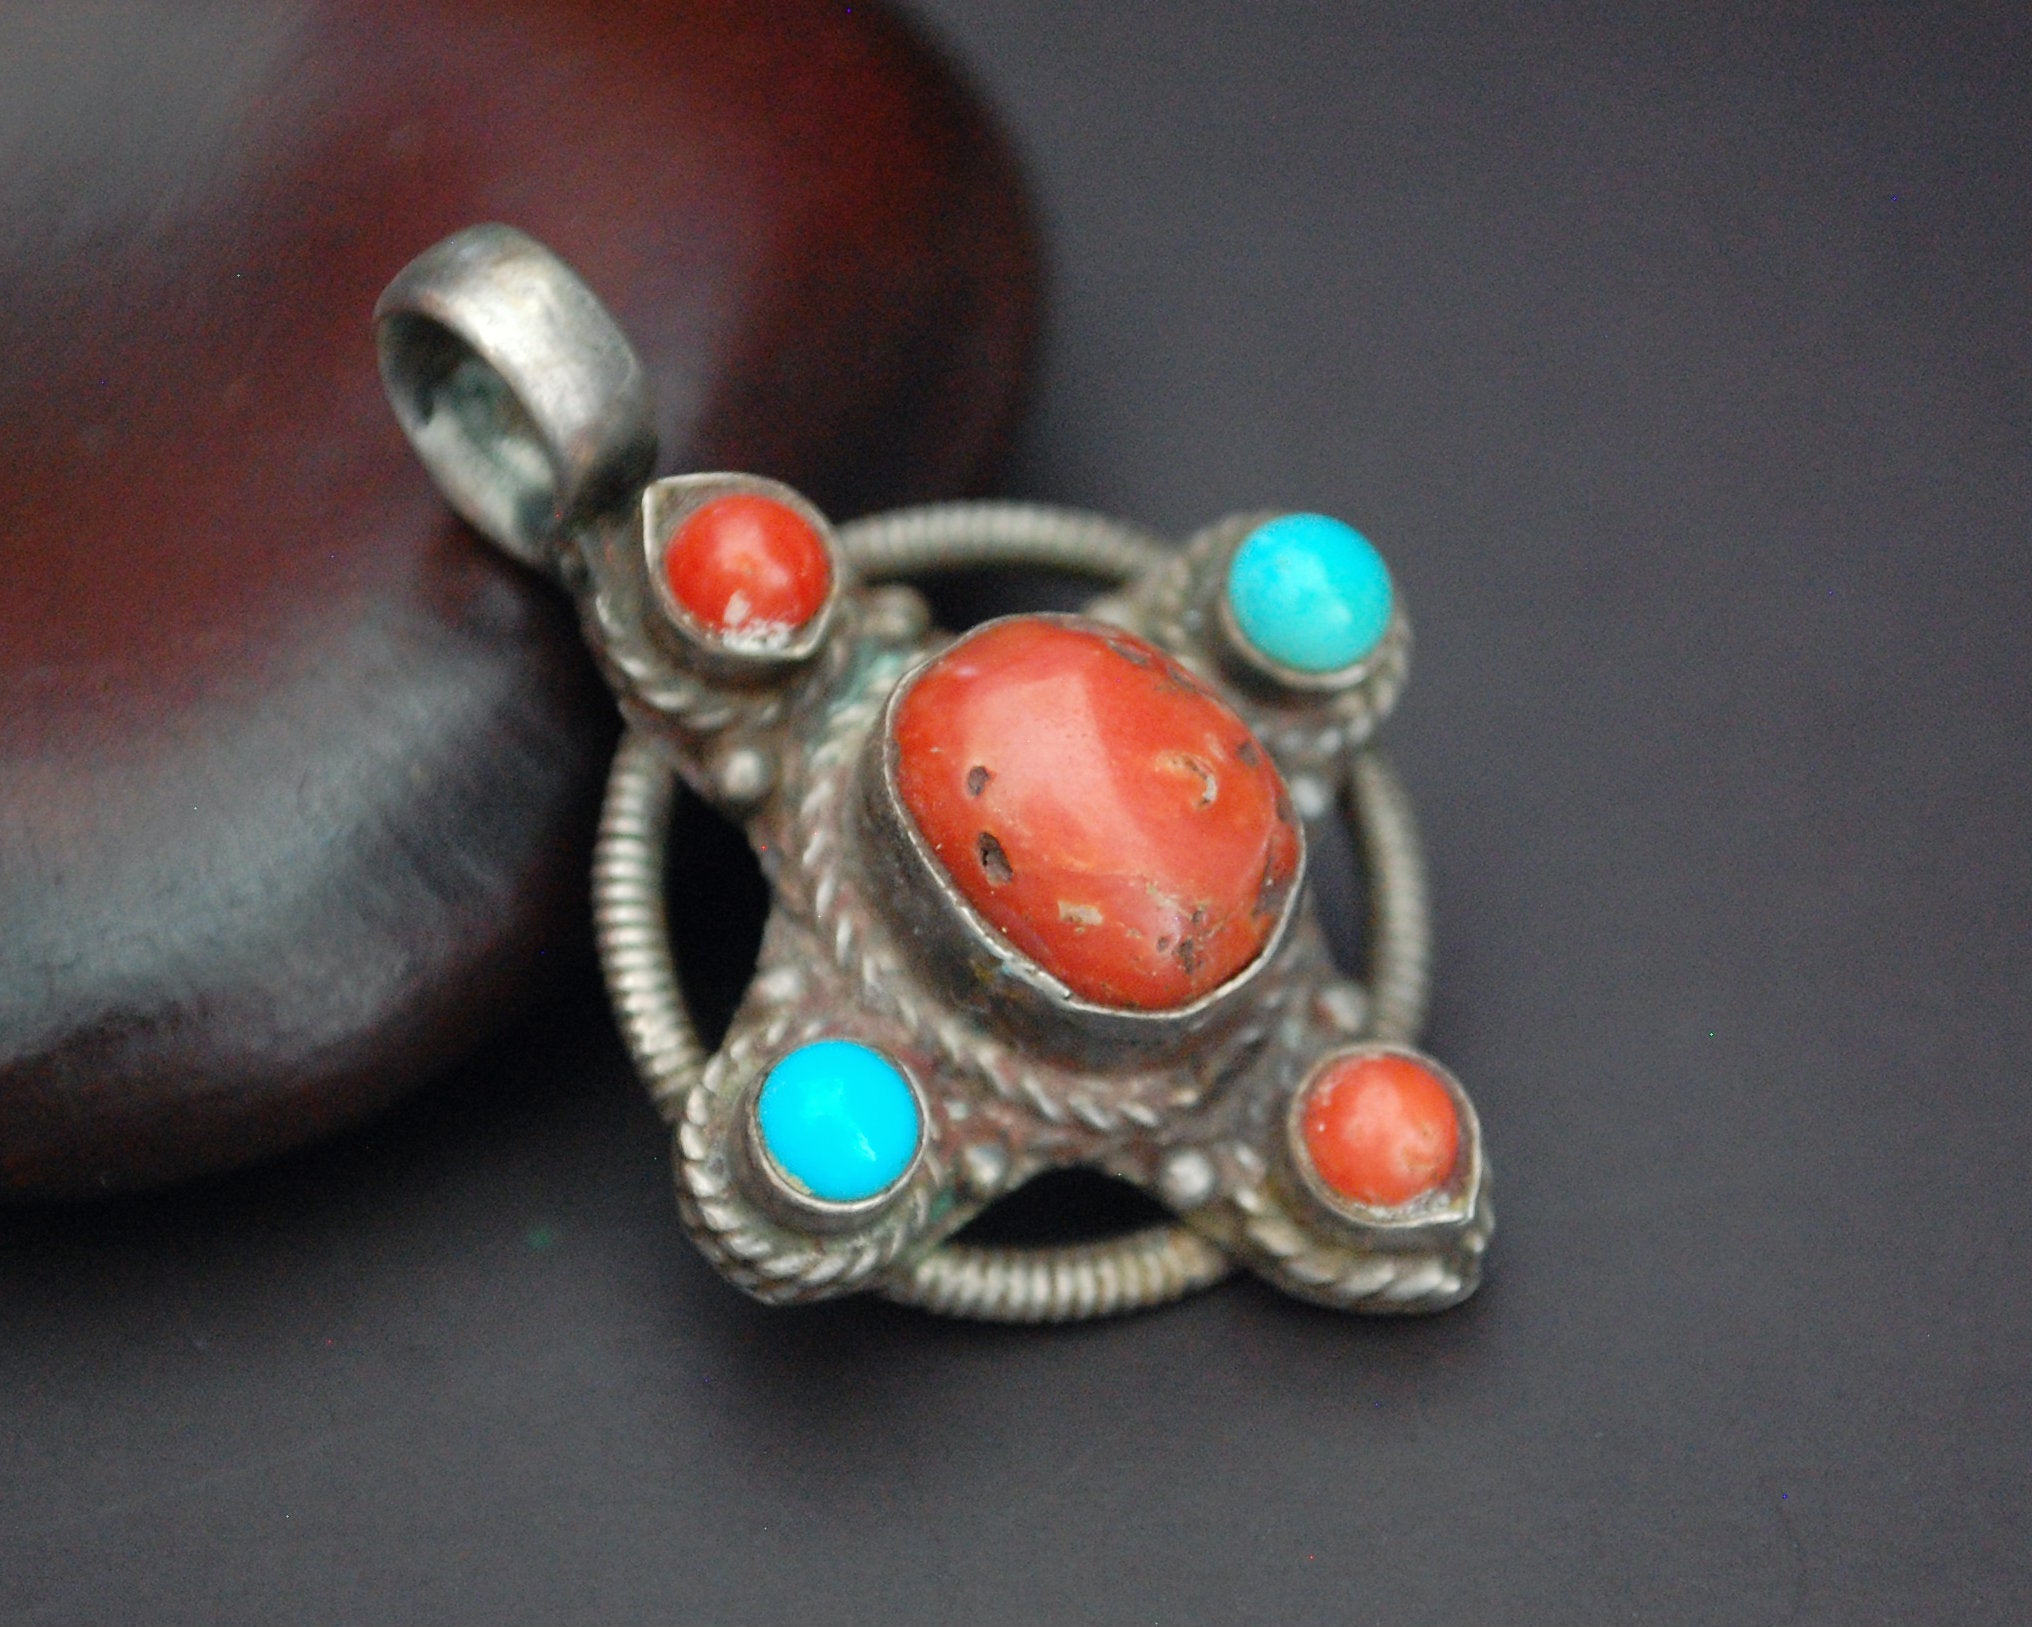 Tibetan Coral and Turquoise Pendant